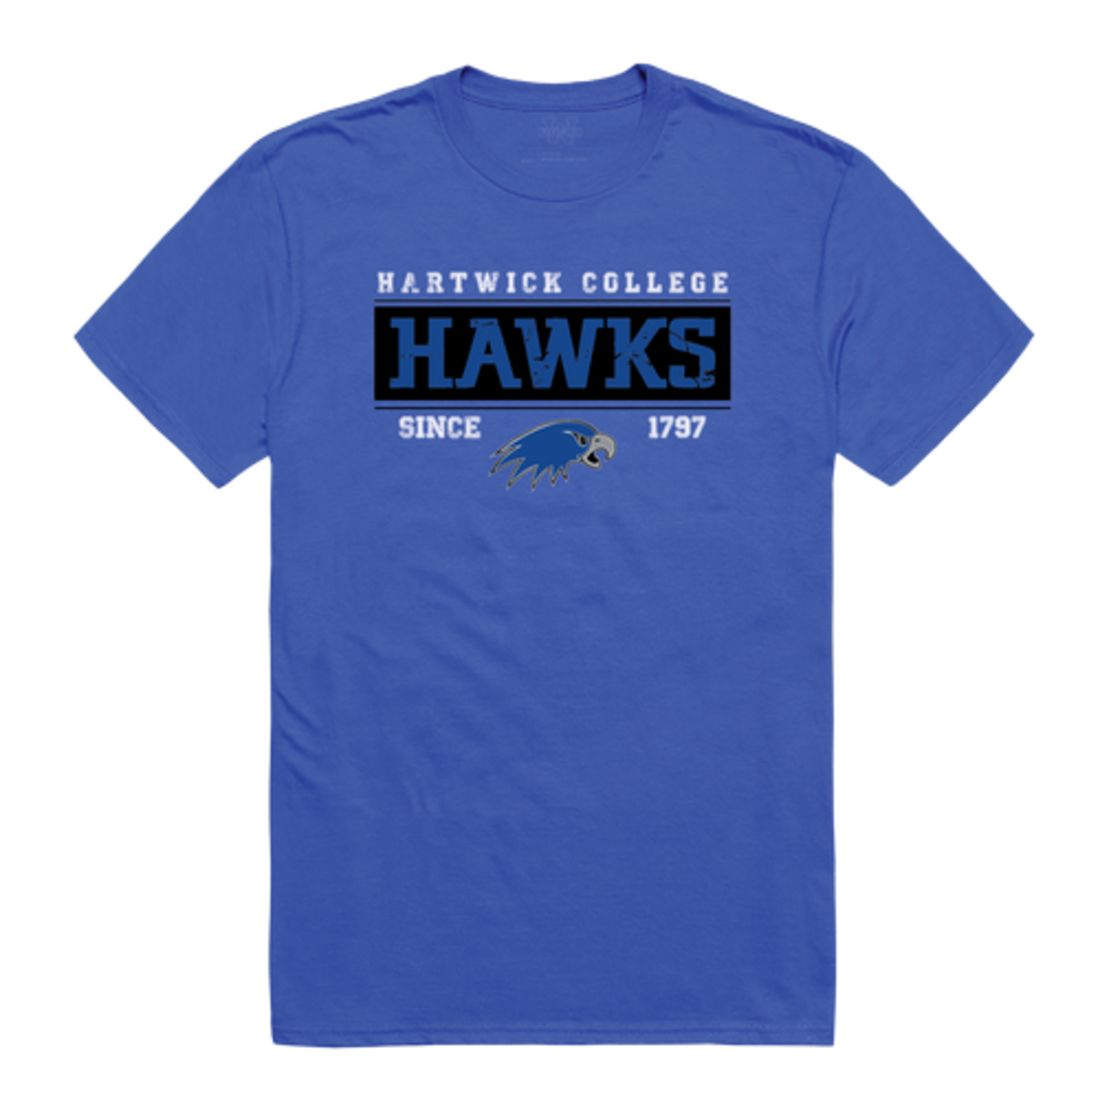 Hartwick College Hawks Established T-Shirt Tee